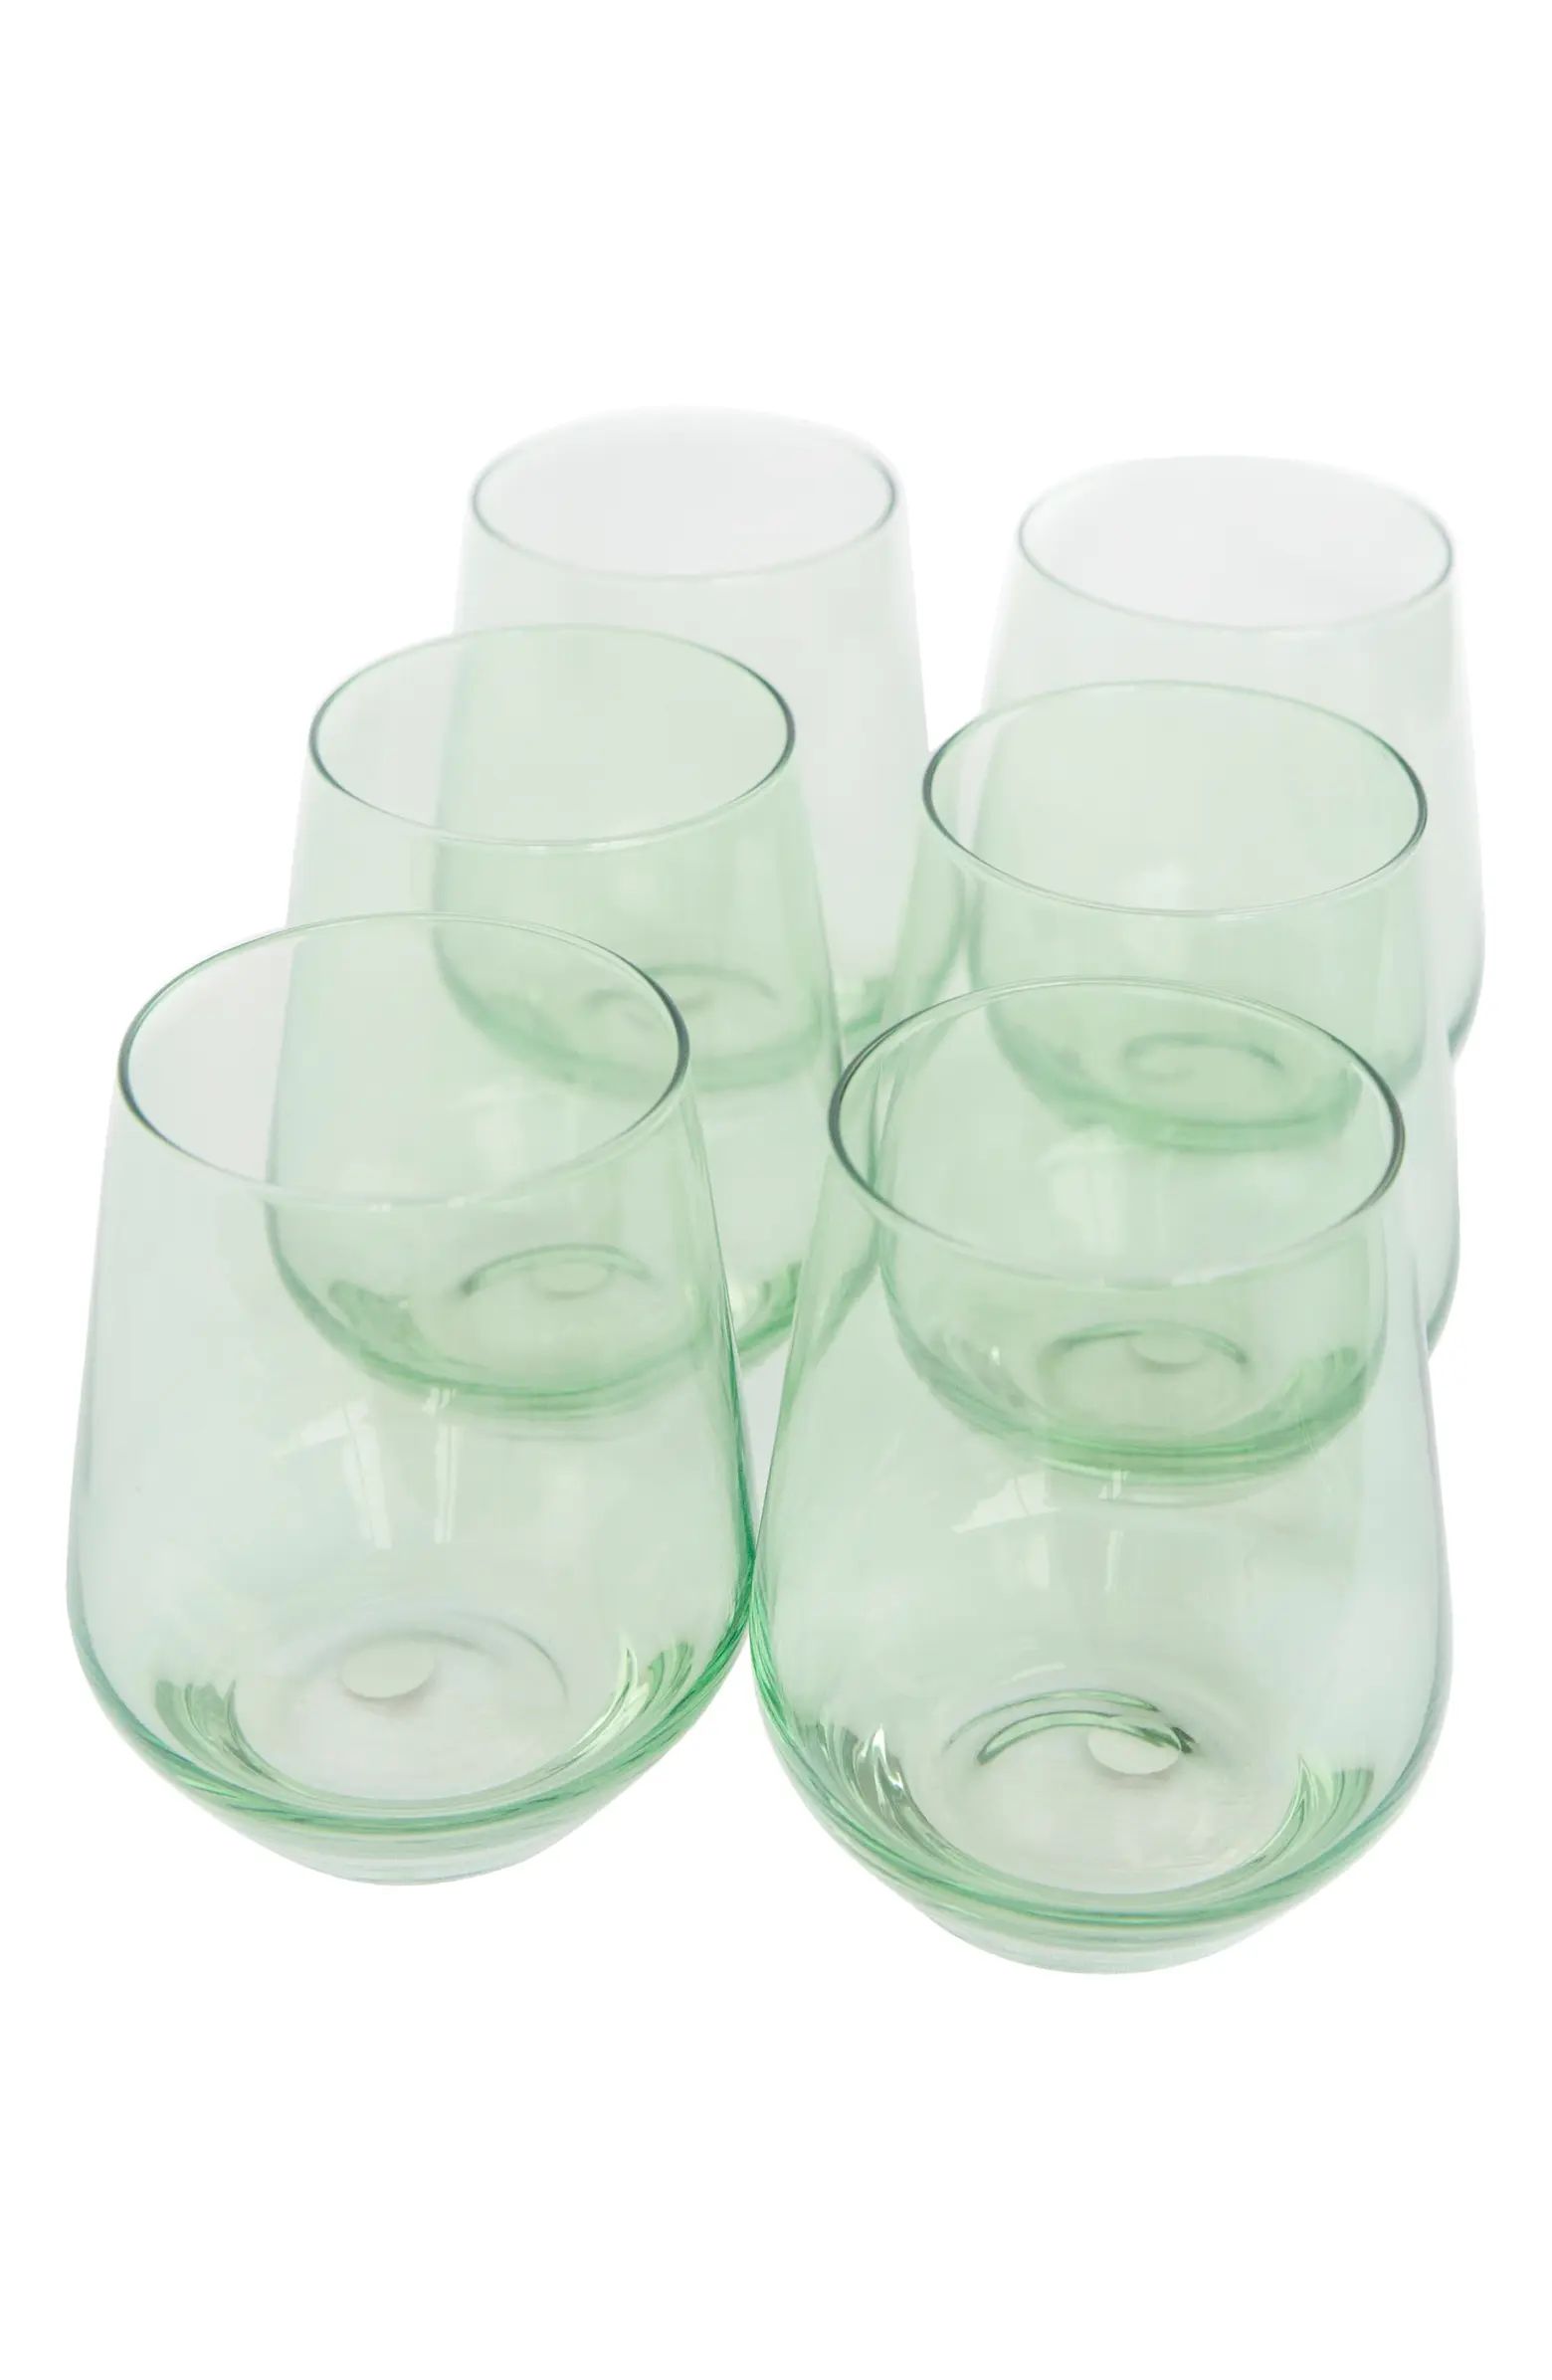 Set of 6 Stemless Wineglasses | Nordstrom